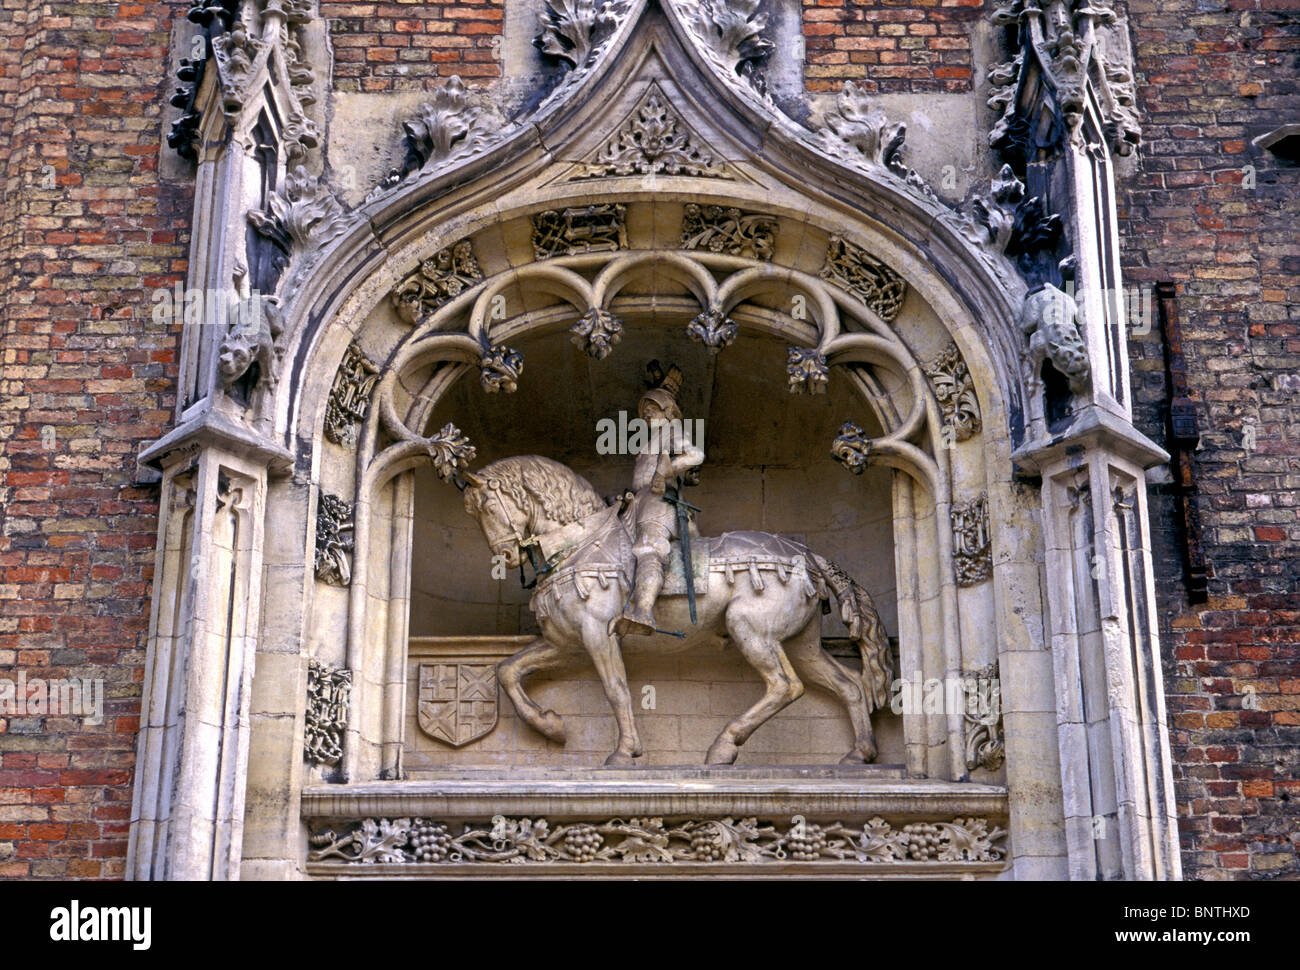 equestrian statue, statuary, sculpture, Gruuthuse Museum, Gruuthusemuseum, palace, mansion, city of Brugge, West Flanders Province, Belgium, Europe Stock Photo